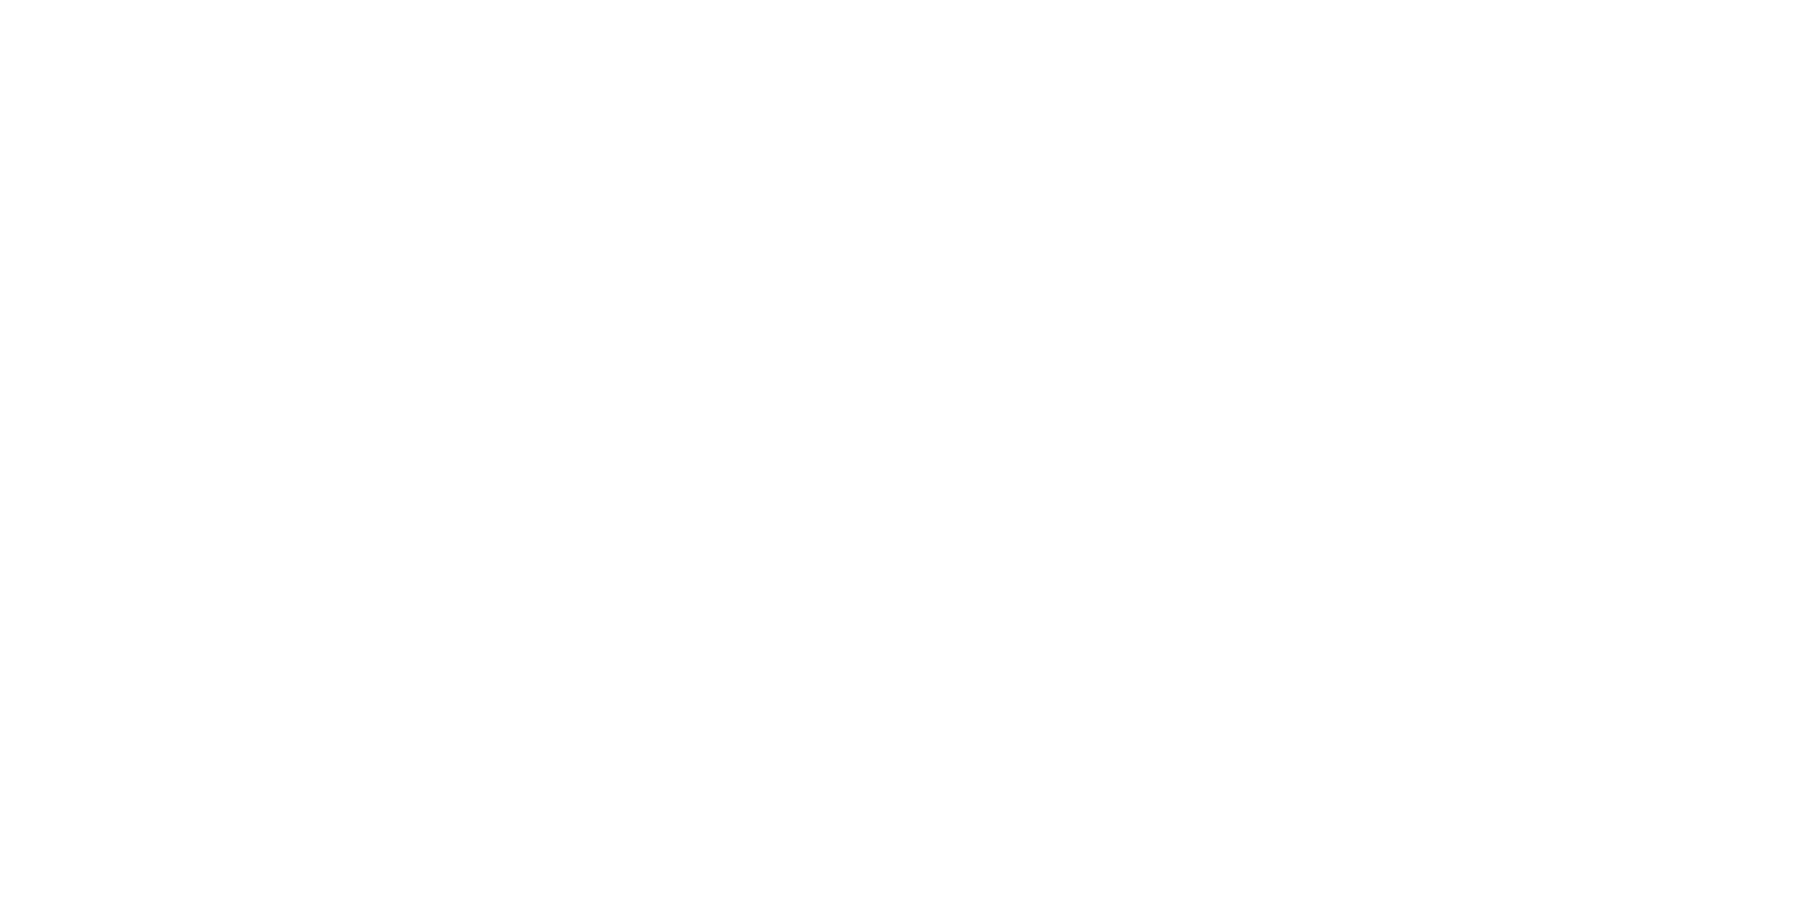 Heritage Christian Fellowship | Of Medford, OR